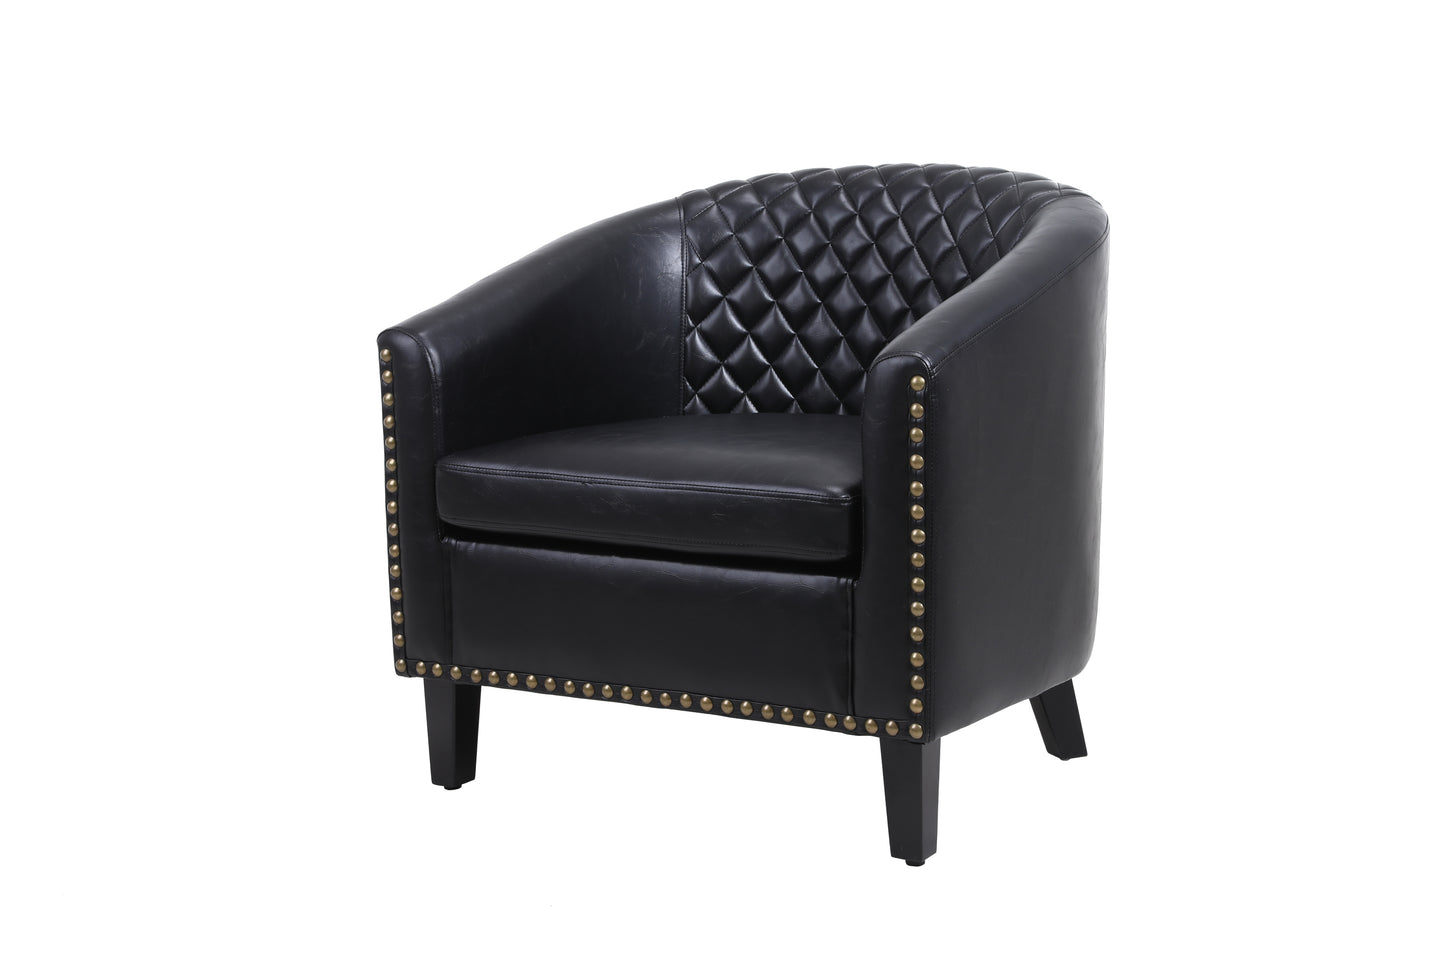 Sleek Black Leather Barrel Accent Chair